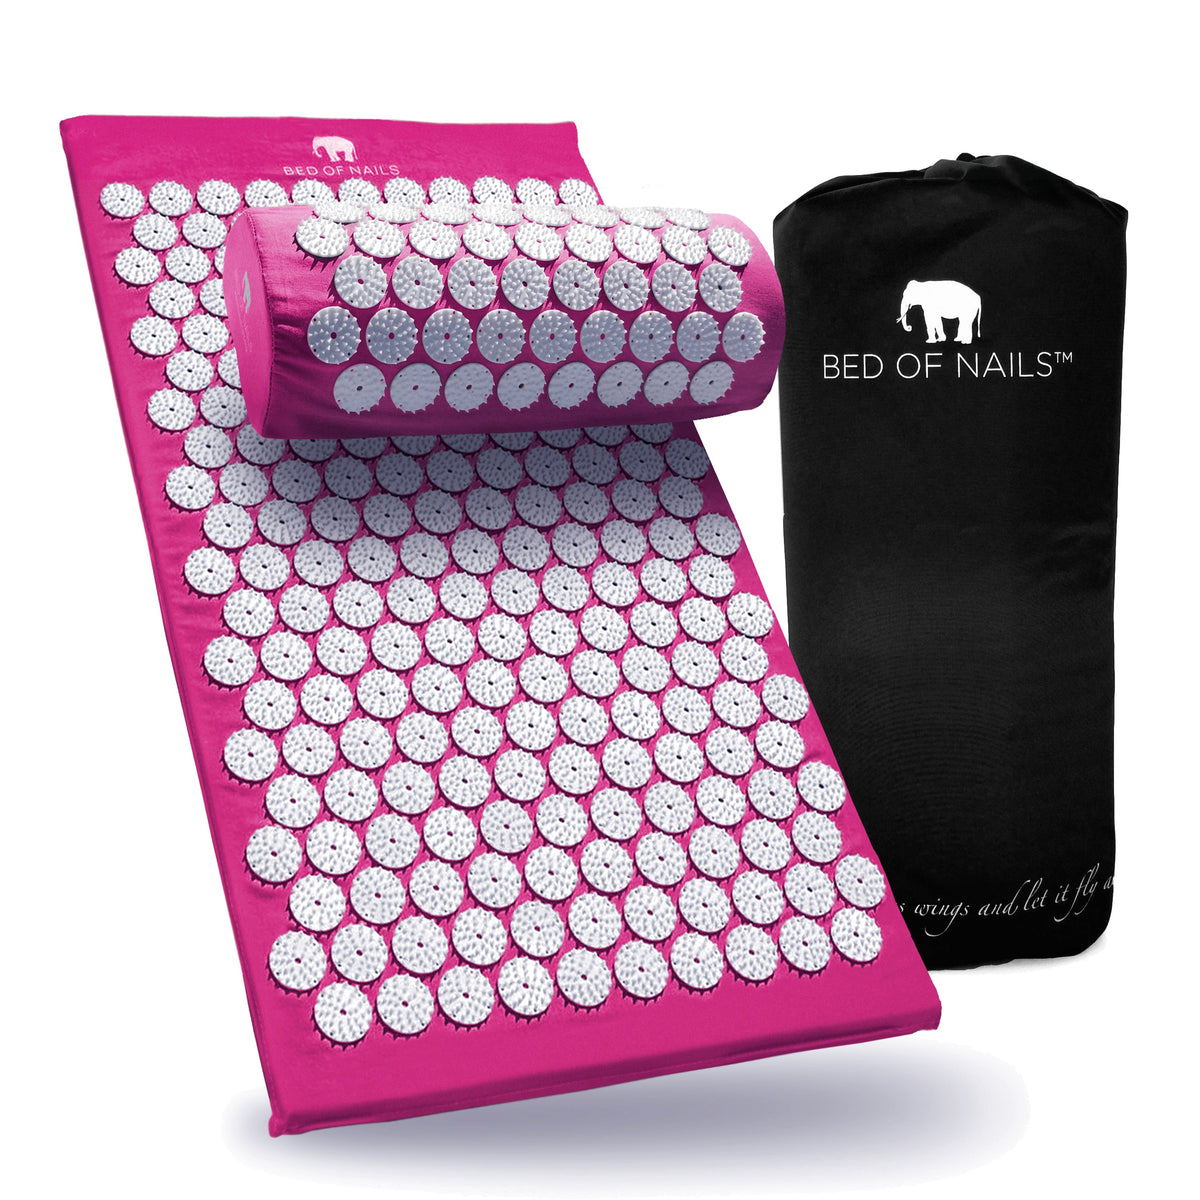 Bed of Nails Mat & Pillow